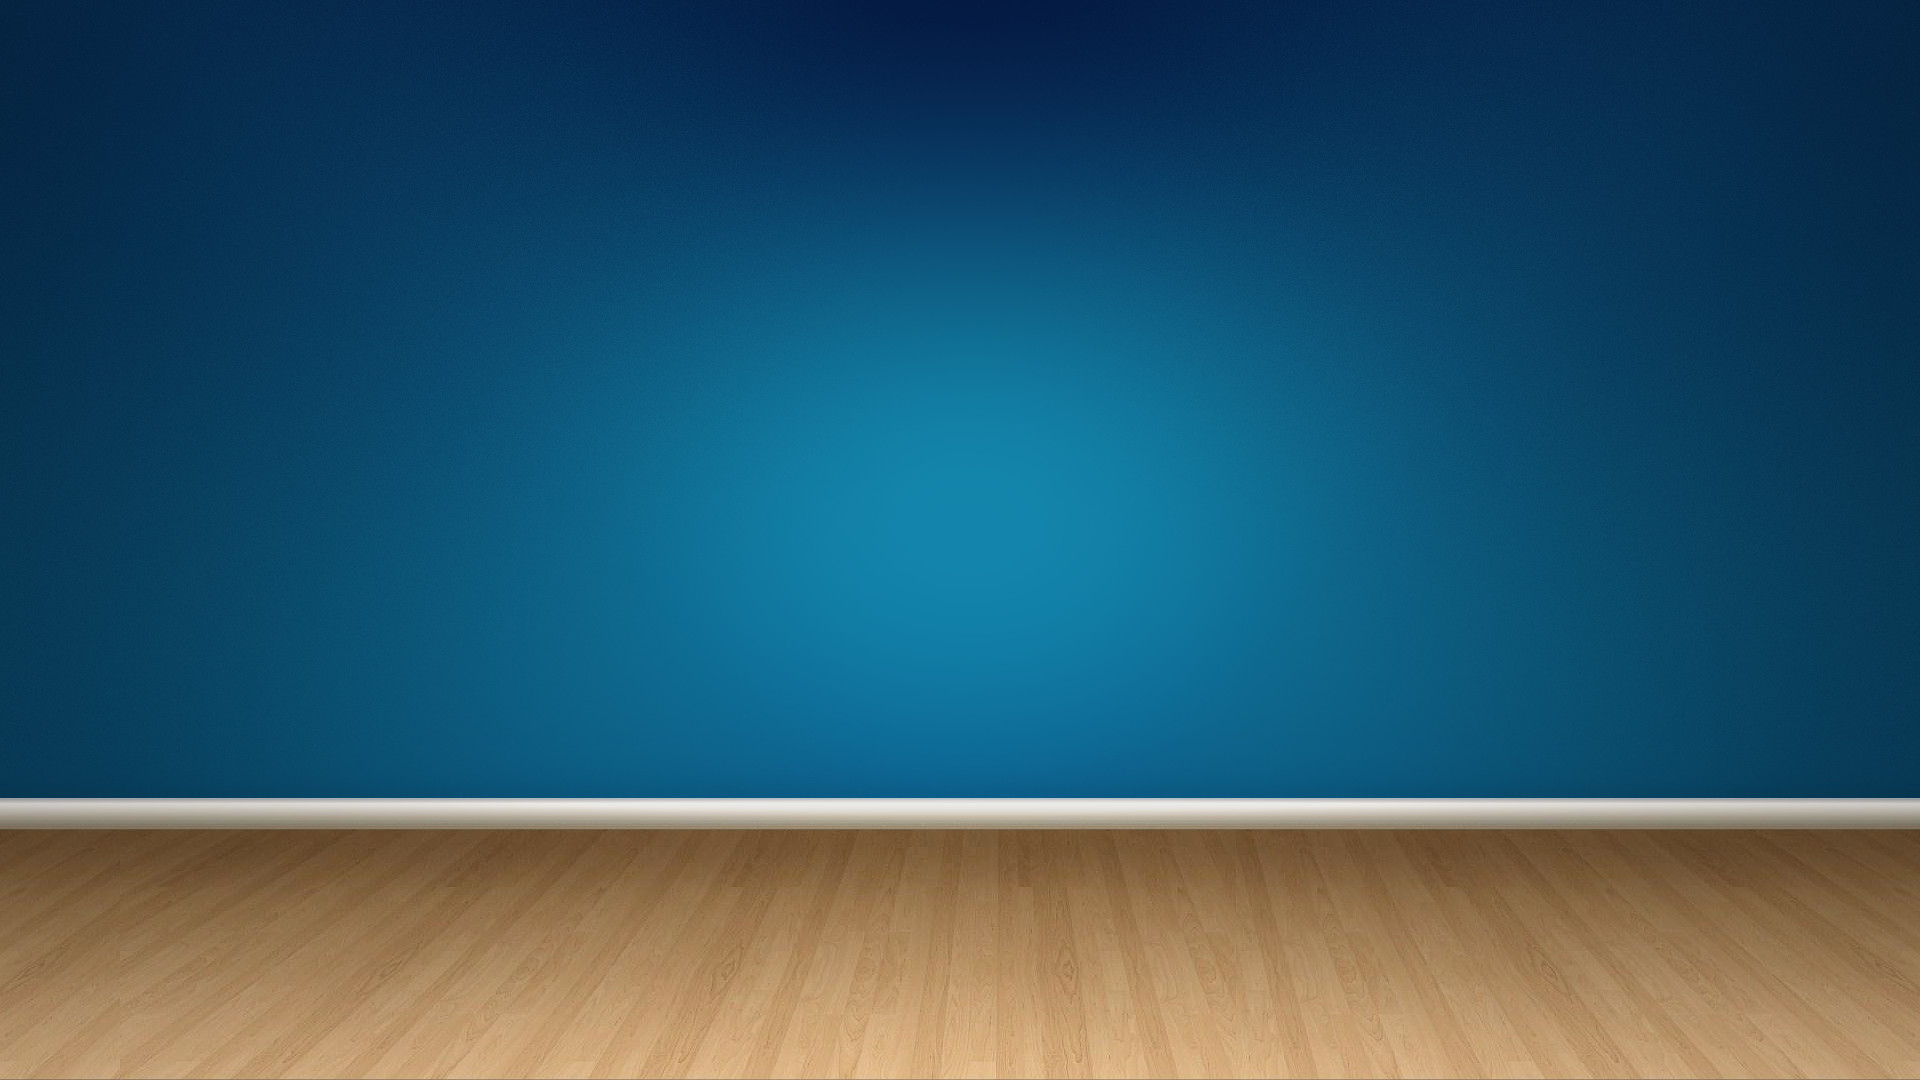 1920x1080 Blue Wall And Wood Floor ...